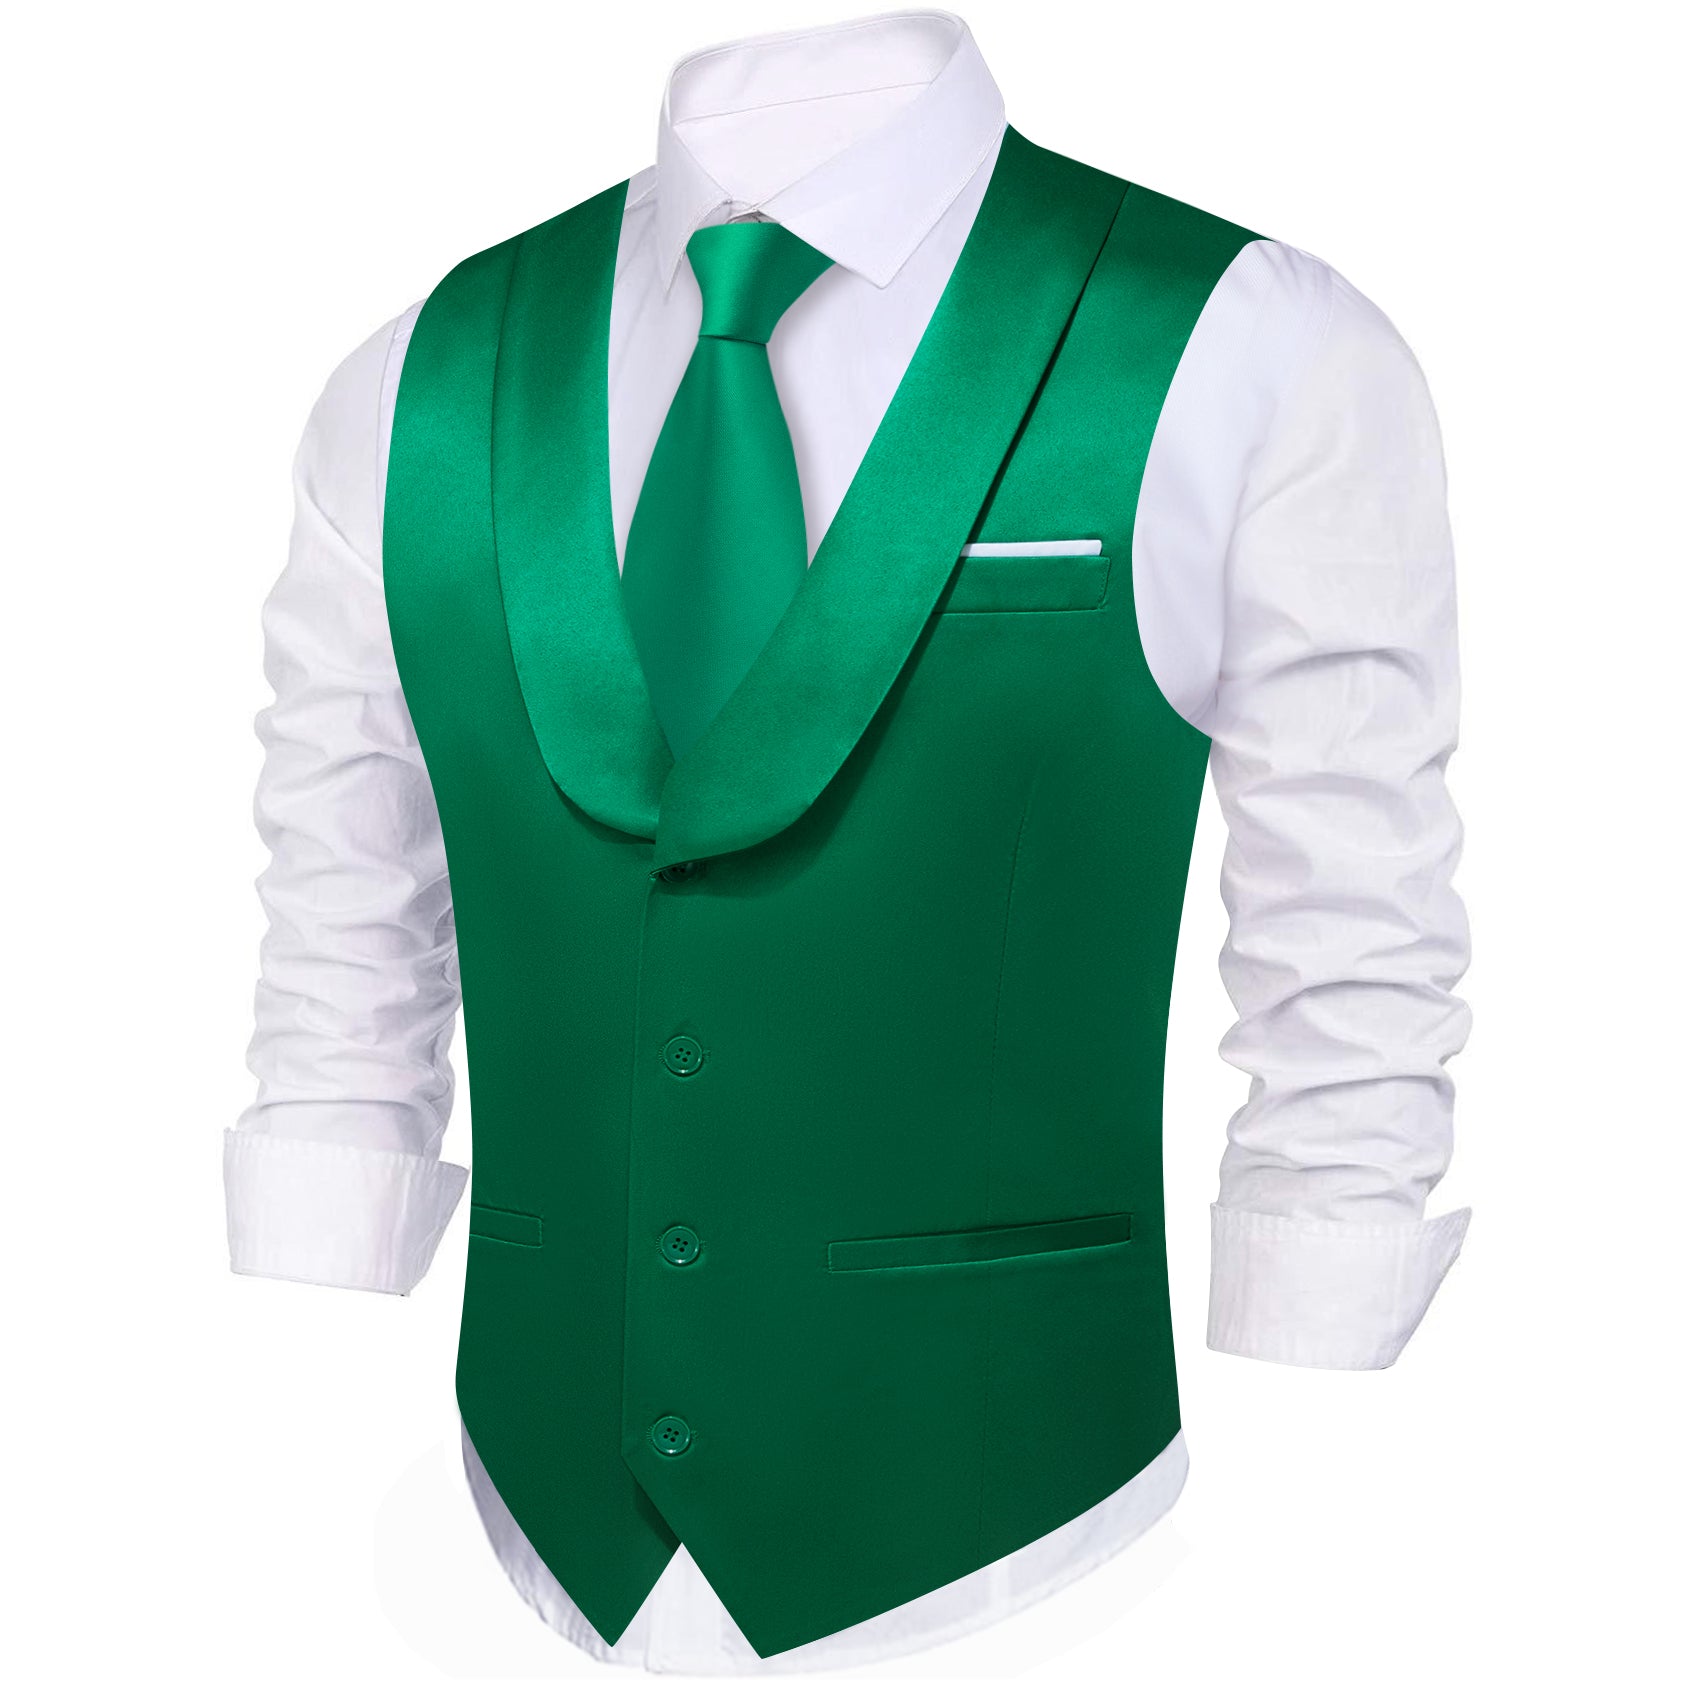 Barry.wang Novetly Green Solid Vest Waistcoat Set